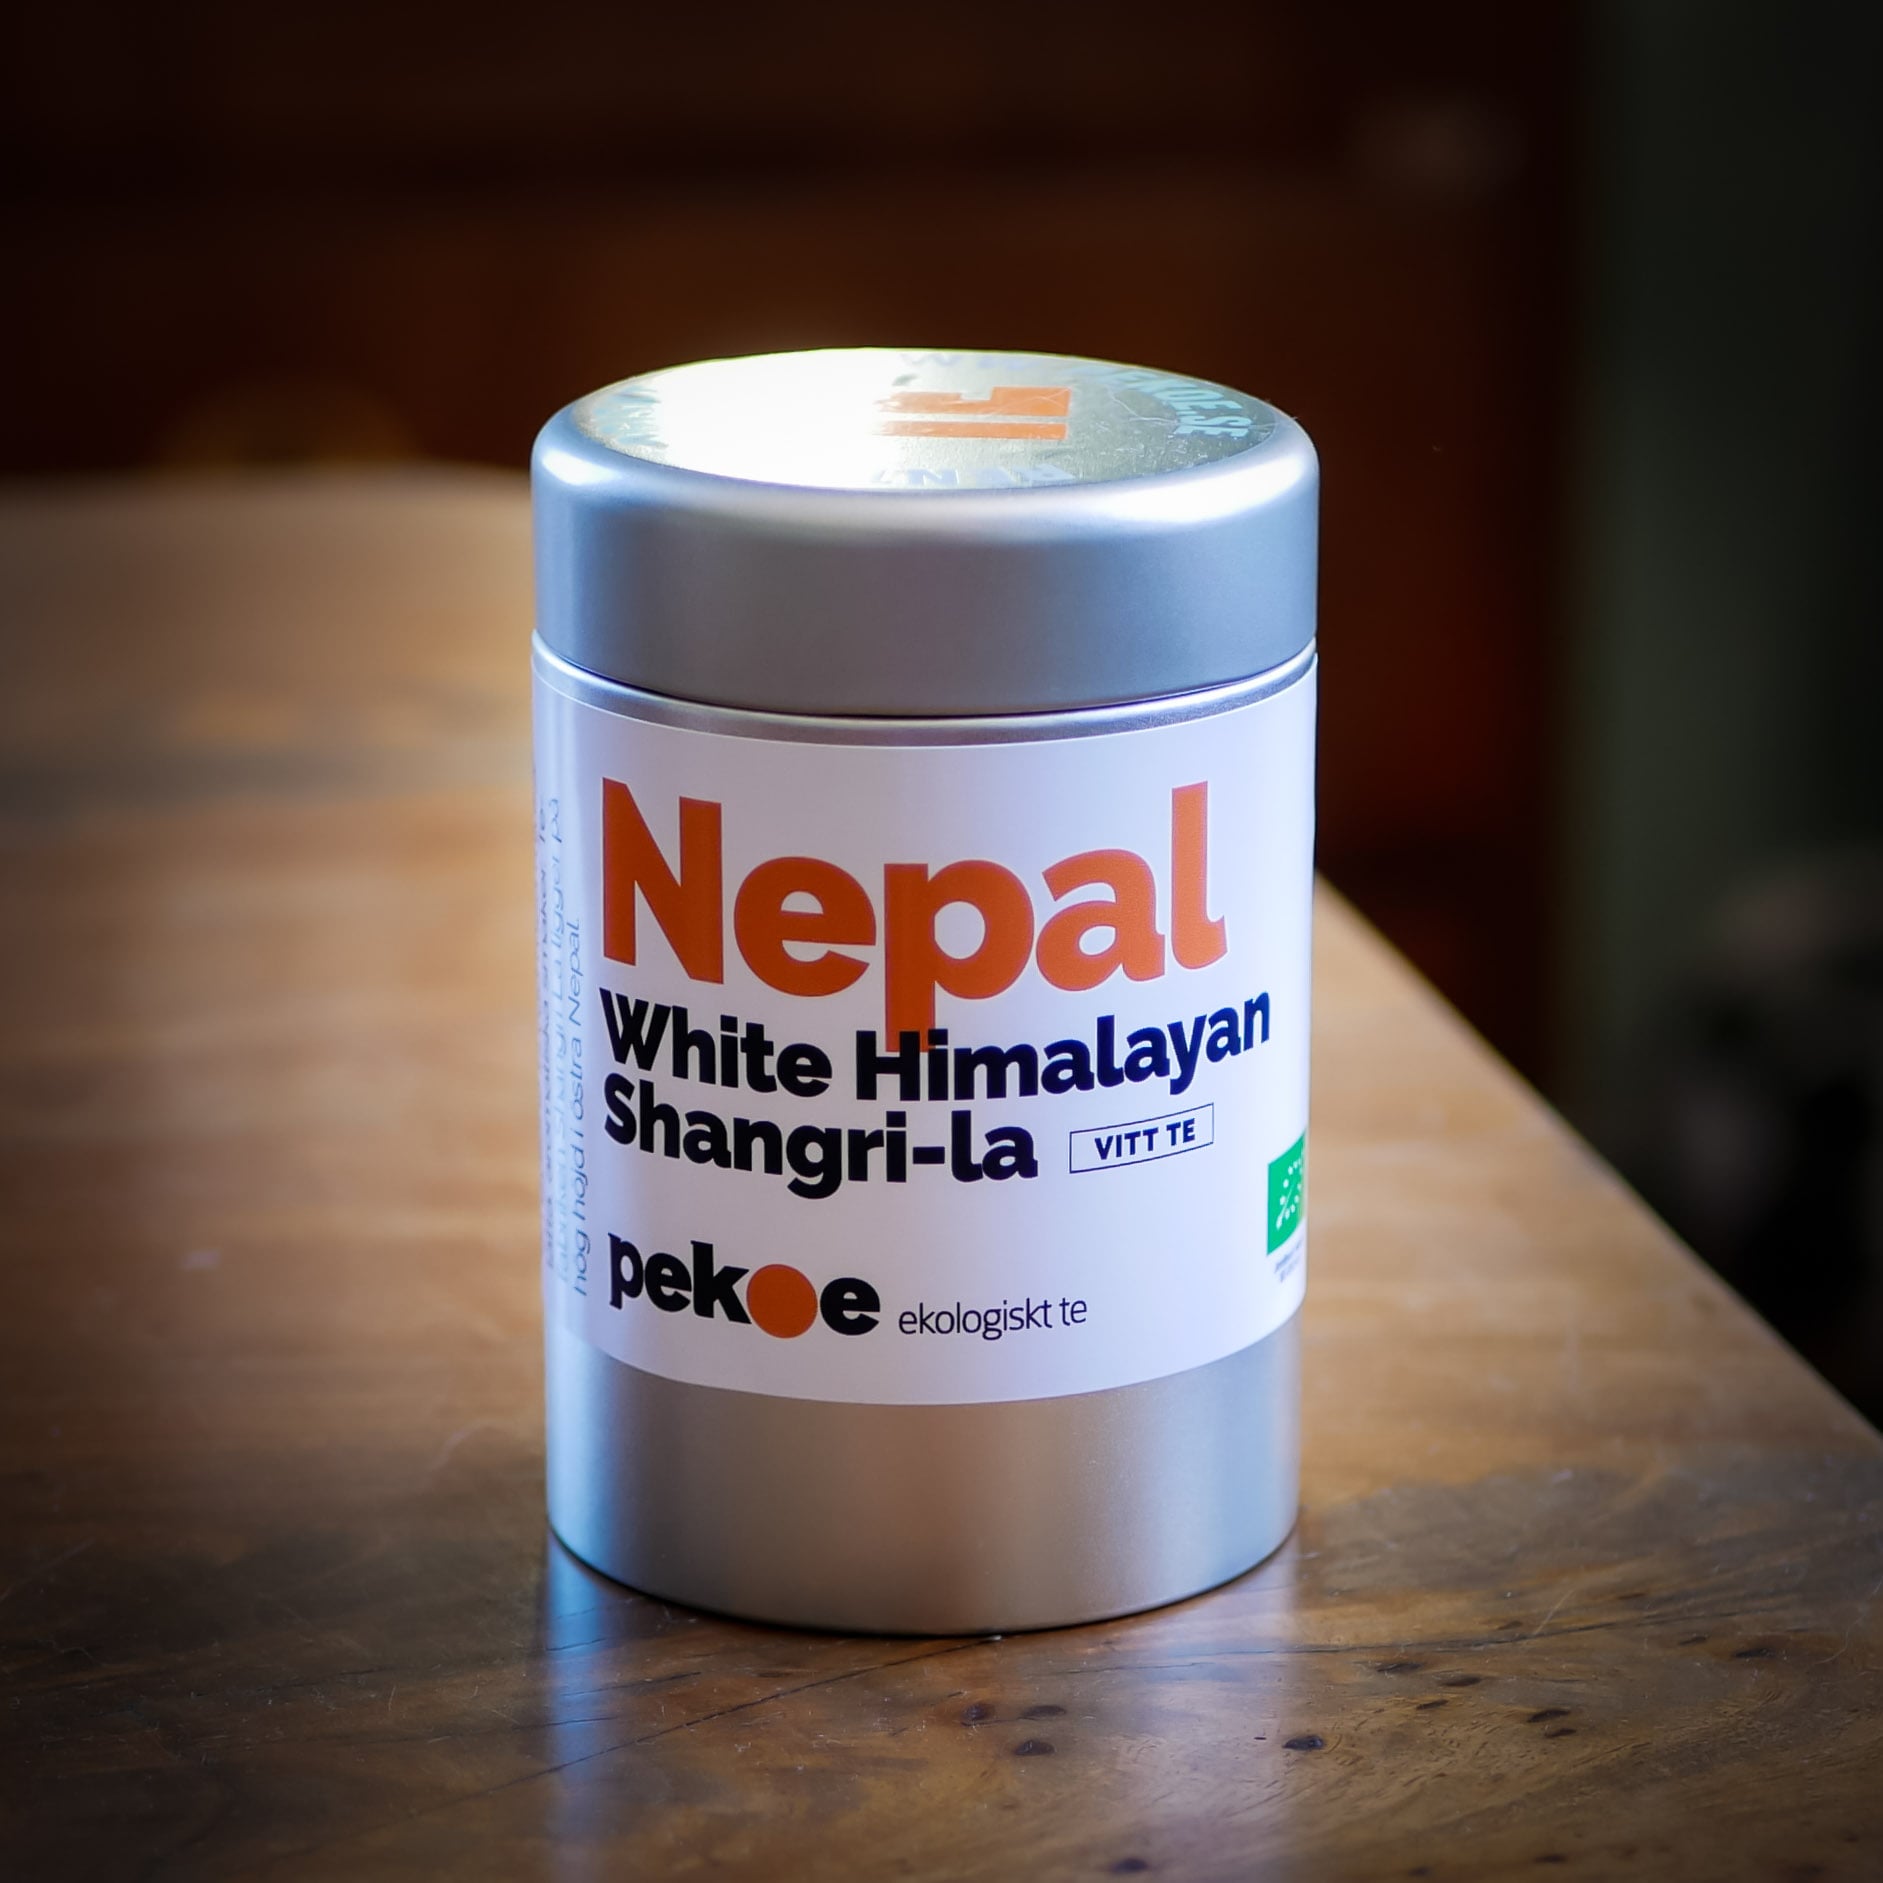 ekologiskt vitt te från Nepal